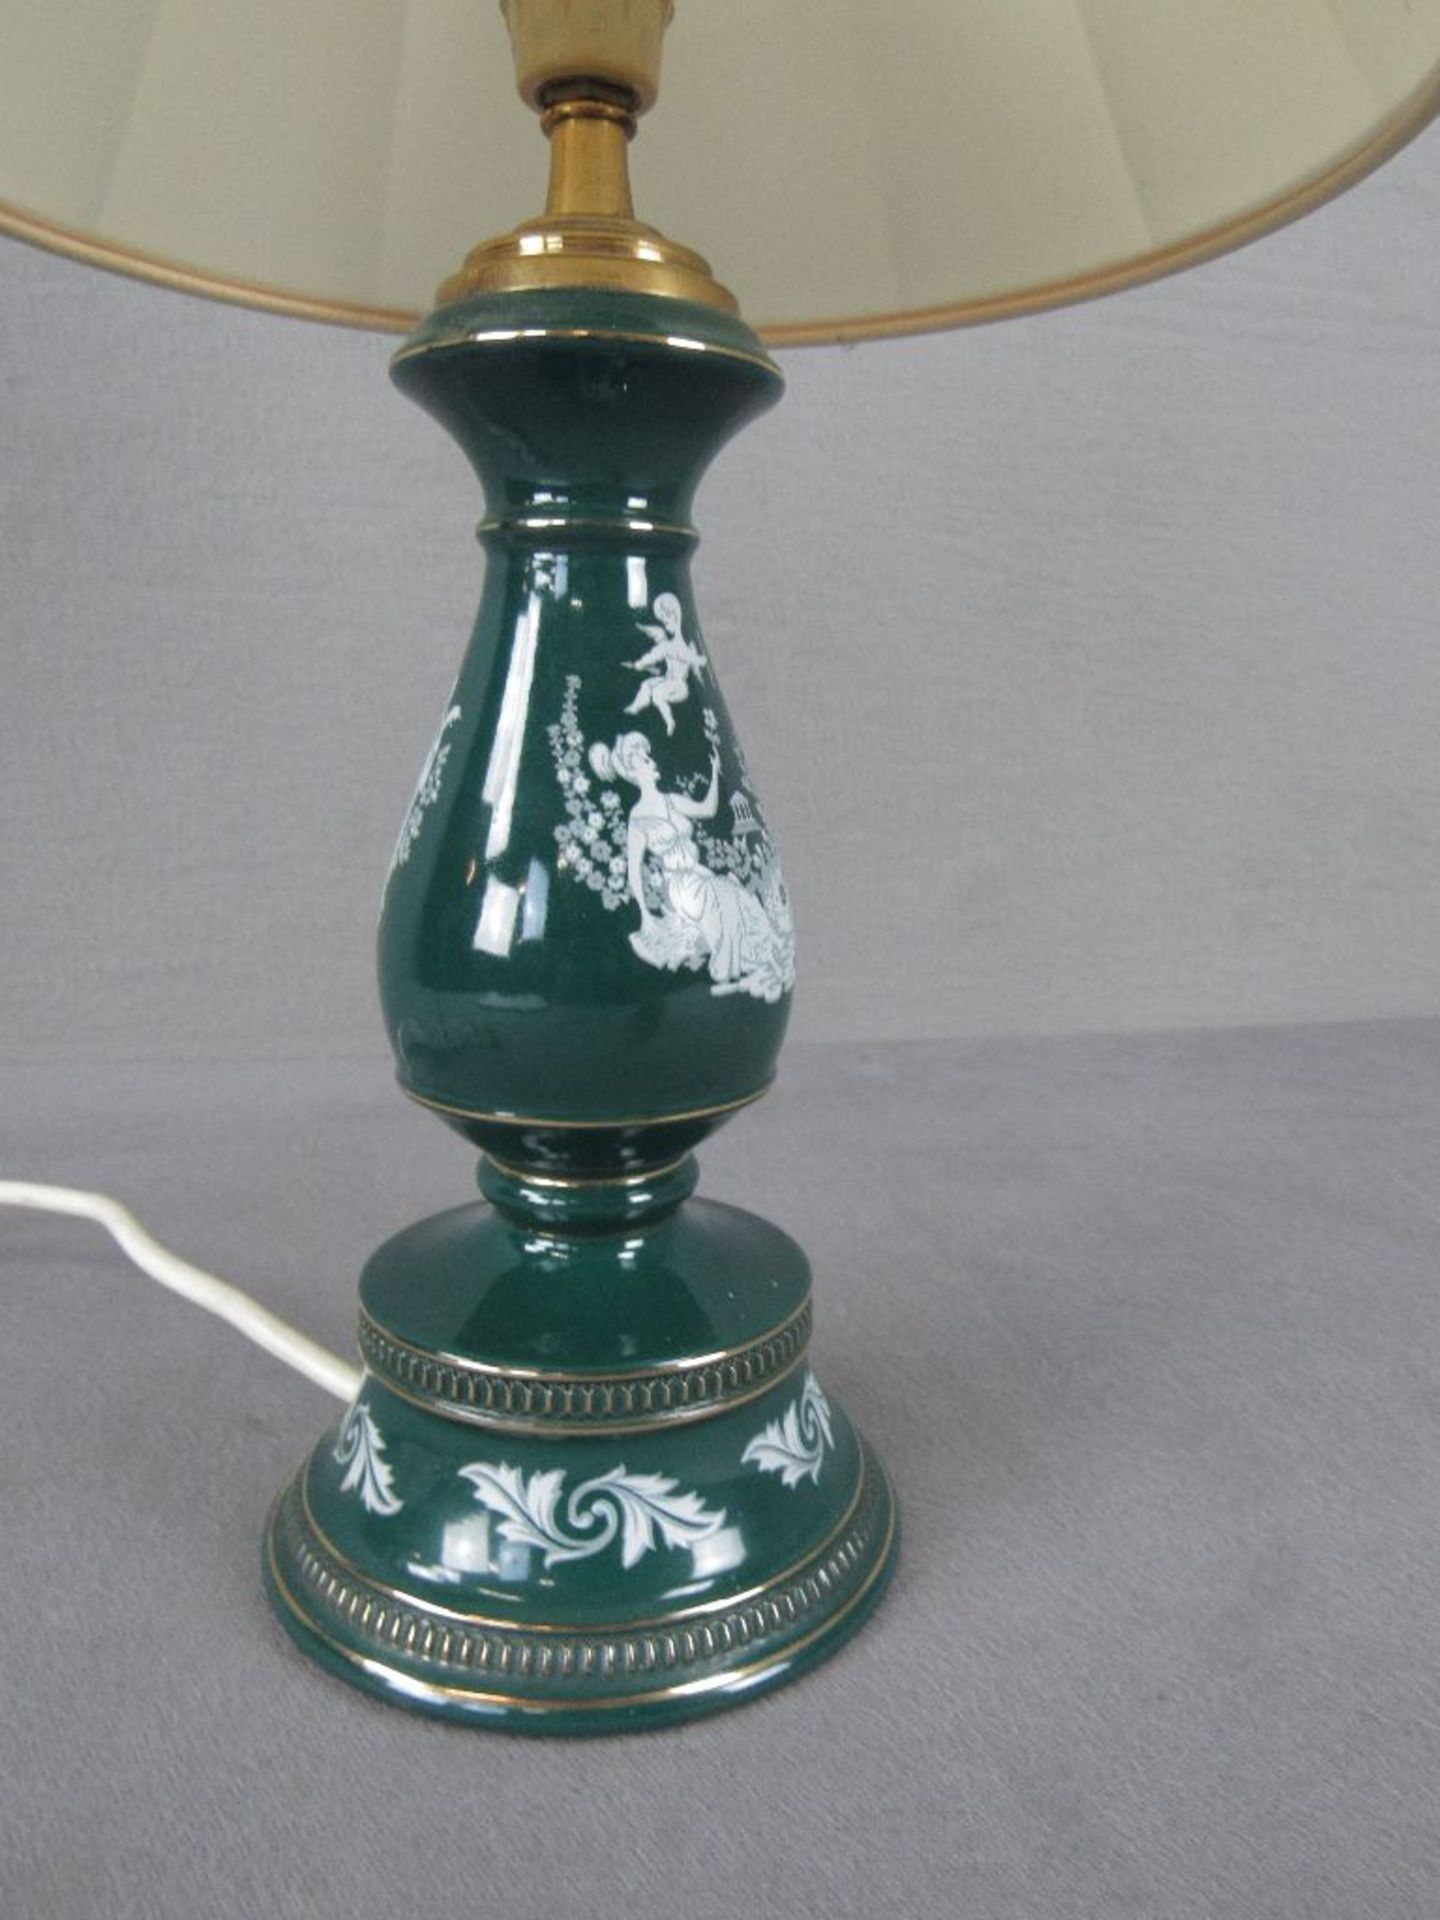 Tischlampe gemarkt Woka handmade Italy - Image 2 of 5